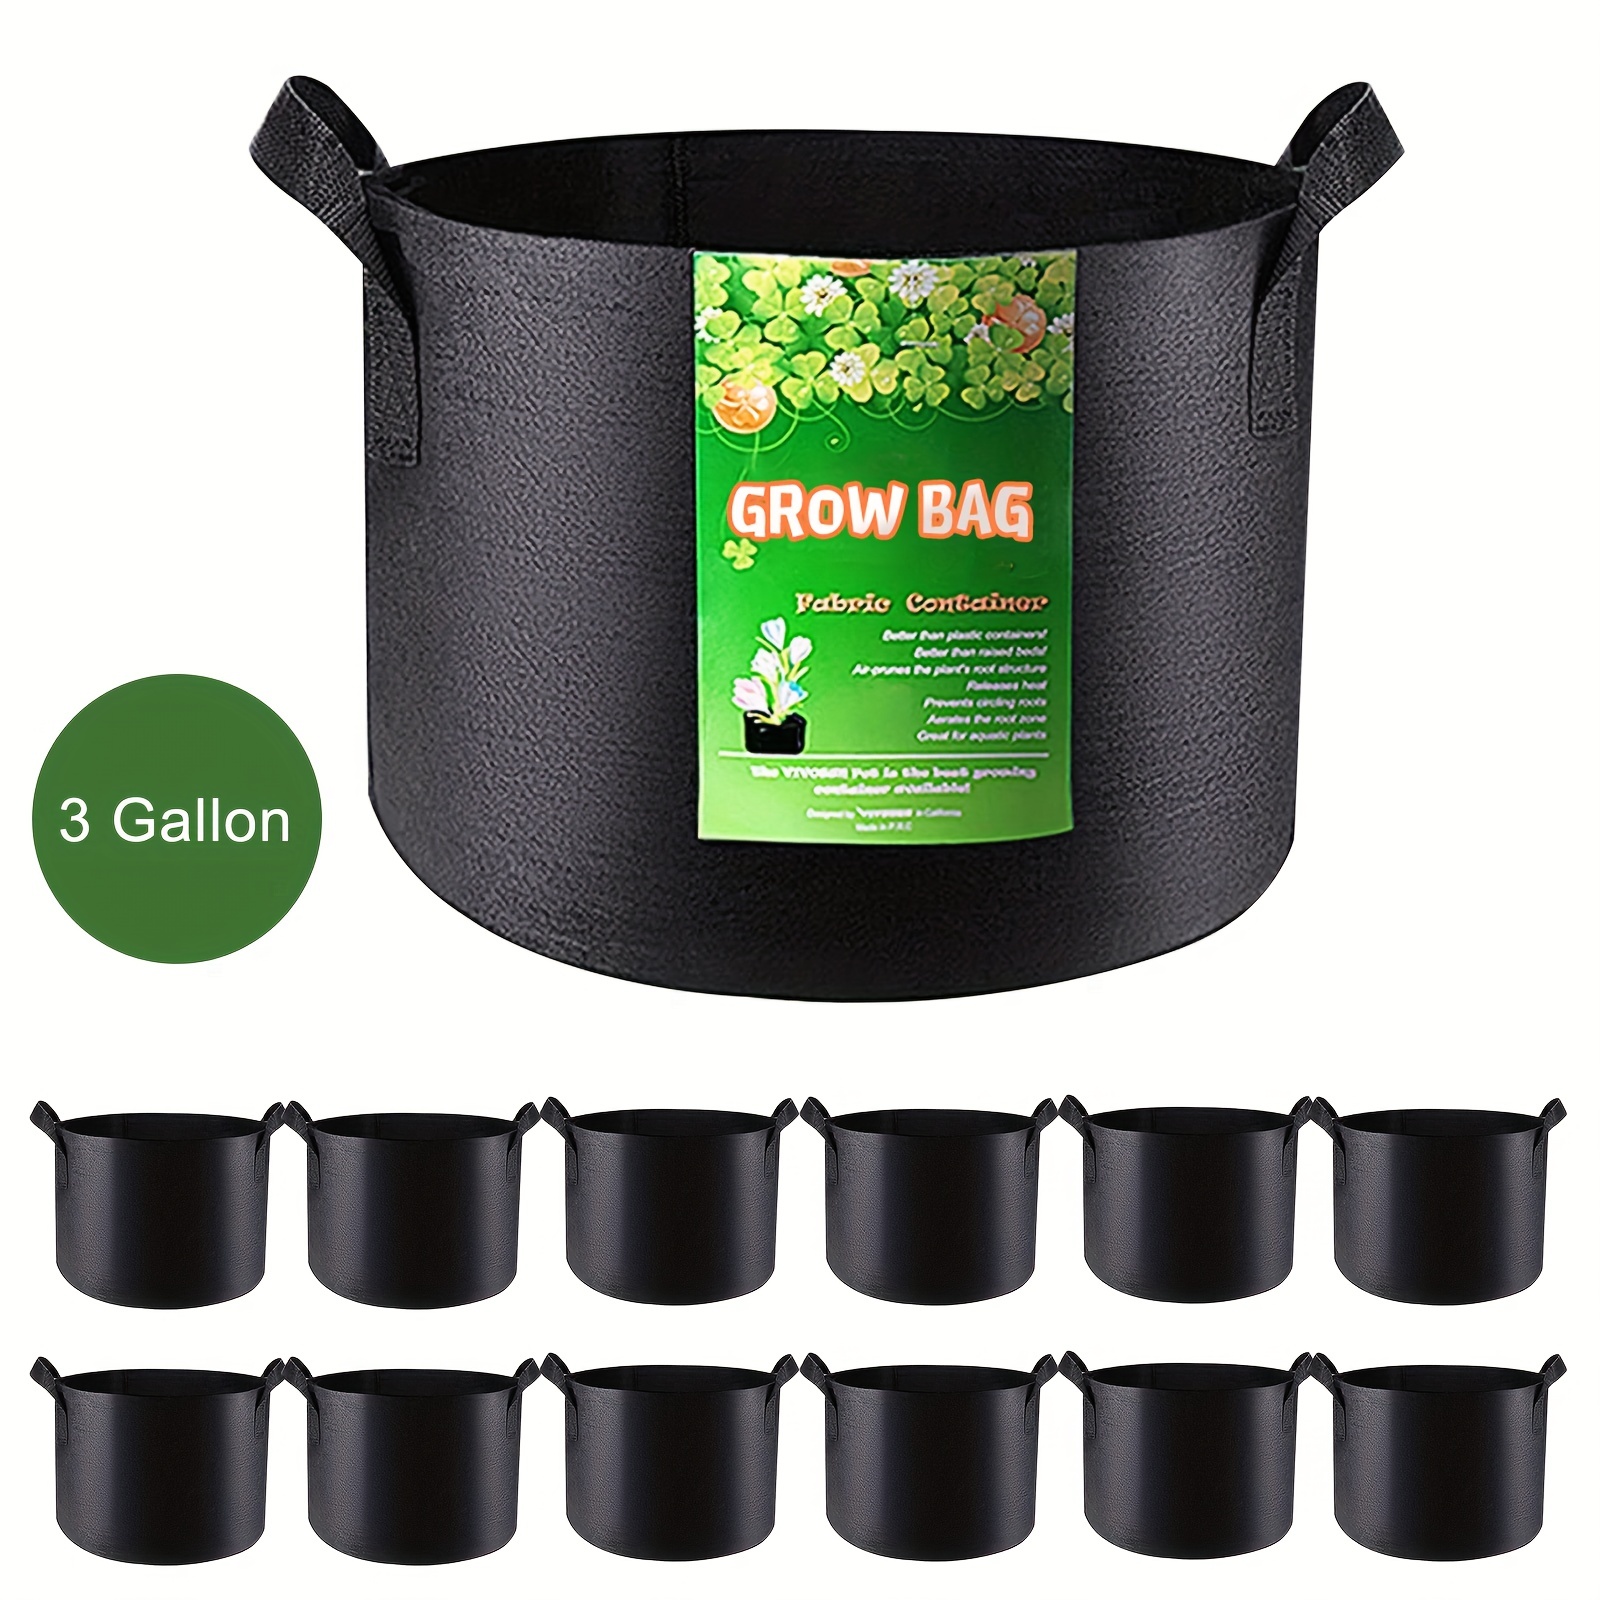 3 Gallon Grow Bags, Gardening Nonwoven Plant Aeration Fabric Pots